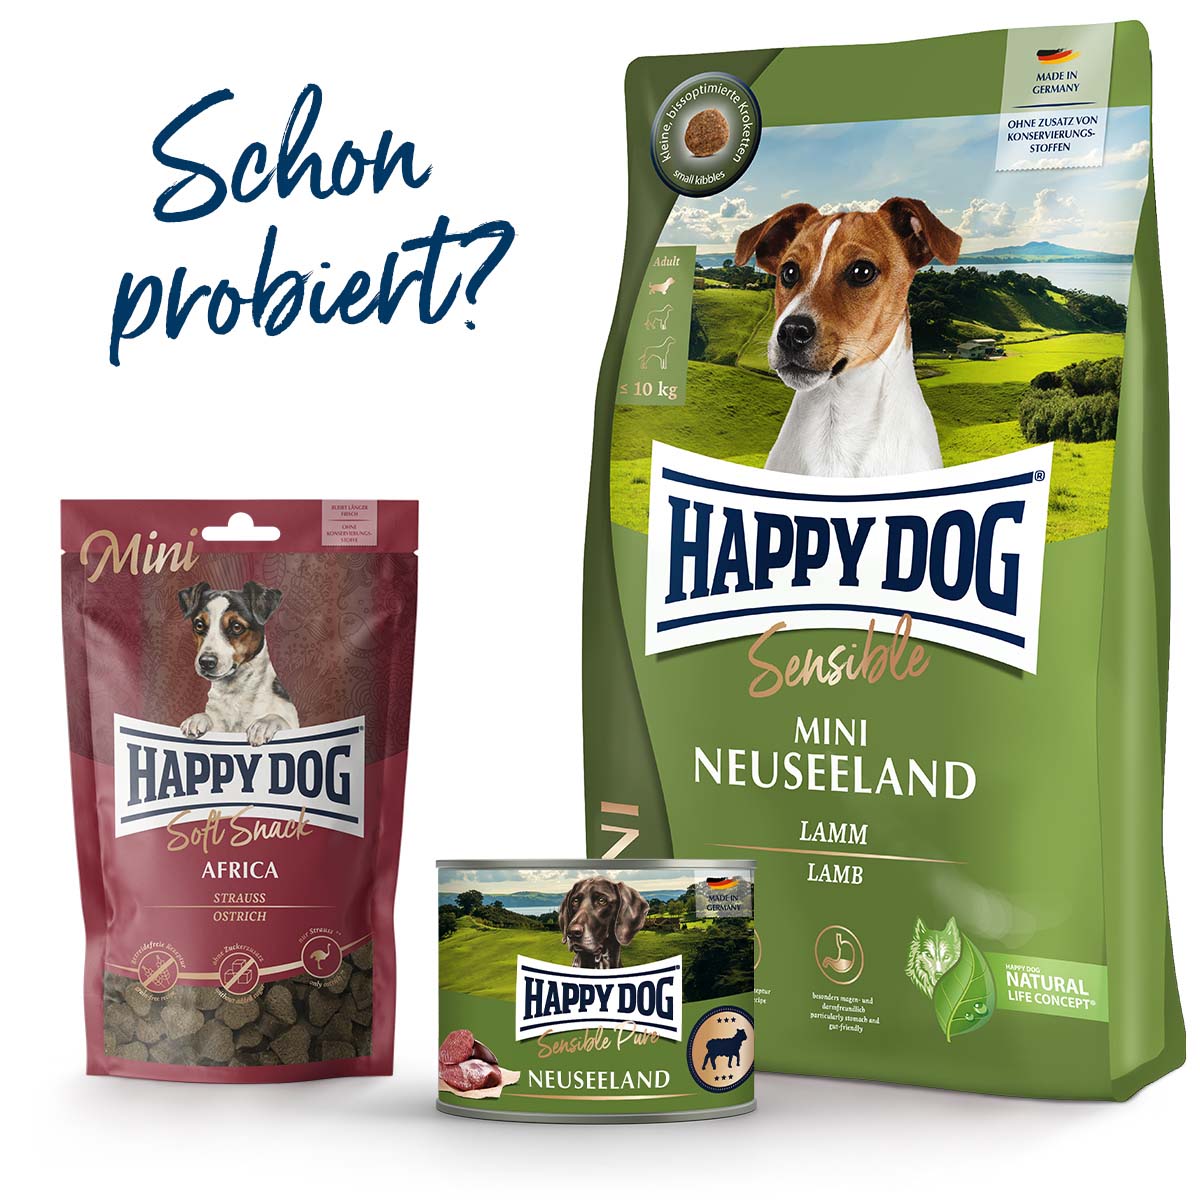 happy dog soft snacks mini neuseeland 5